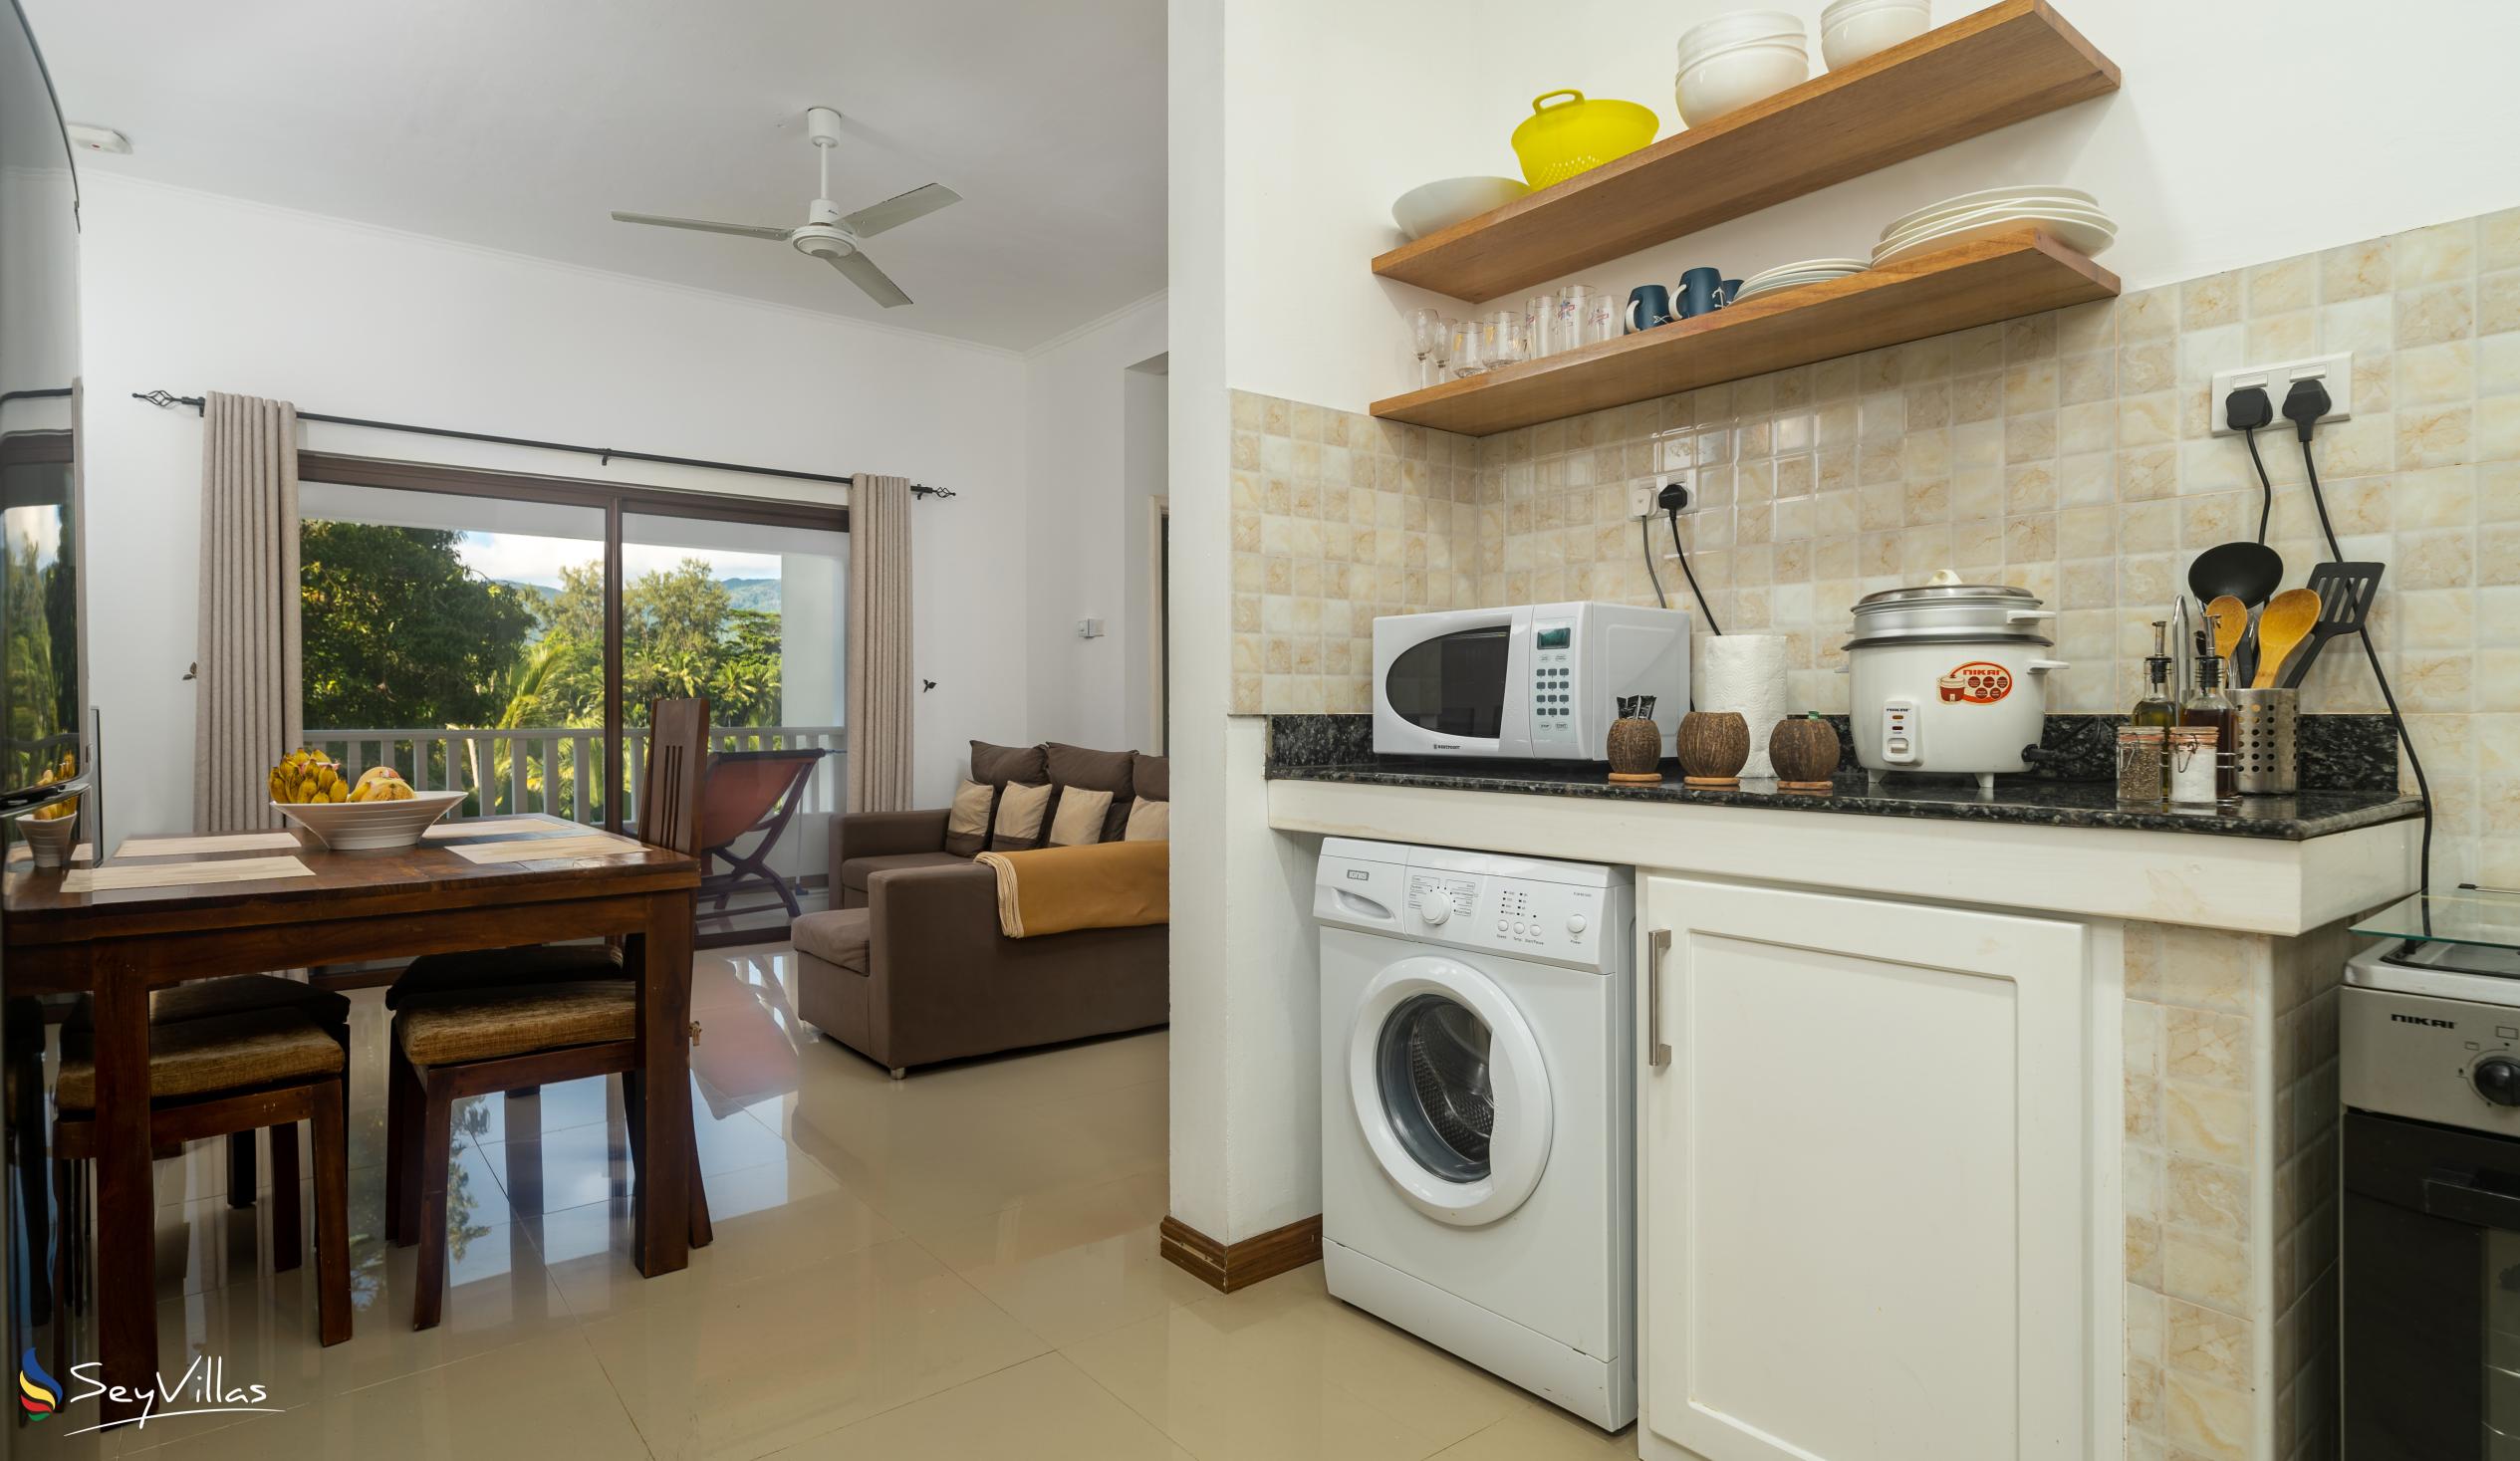 Foto 24: Kanasuk Self Catering Apartments - Appartamento Cinnamon con 2 camere - Mahé (Seychelles)